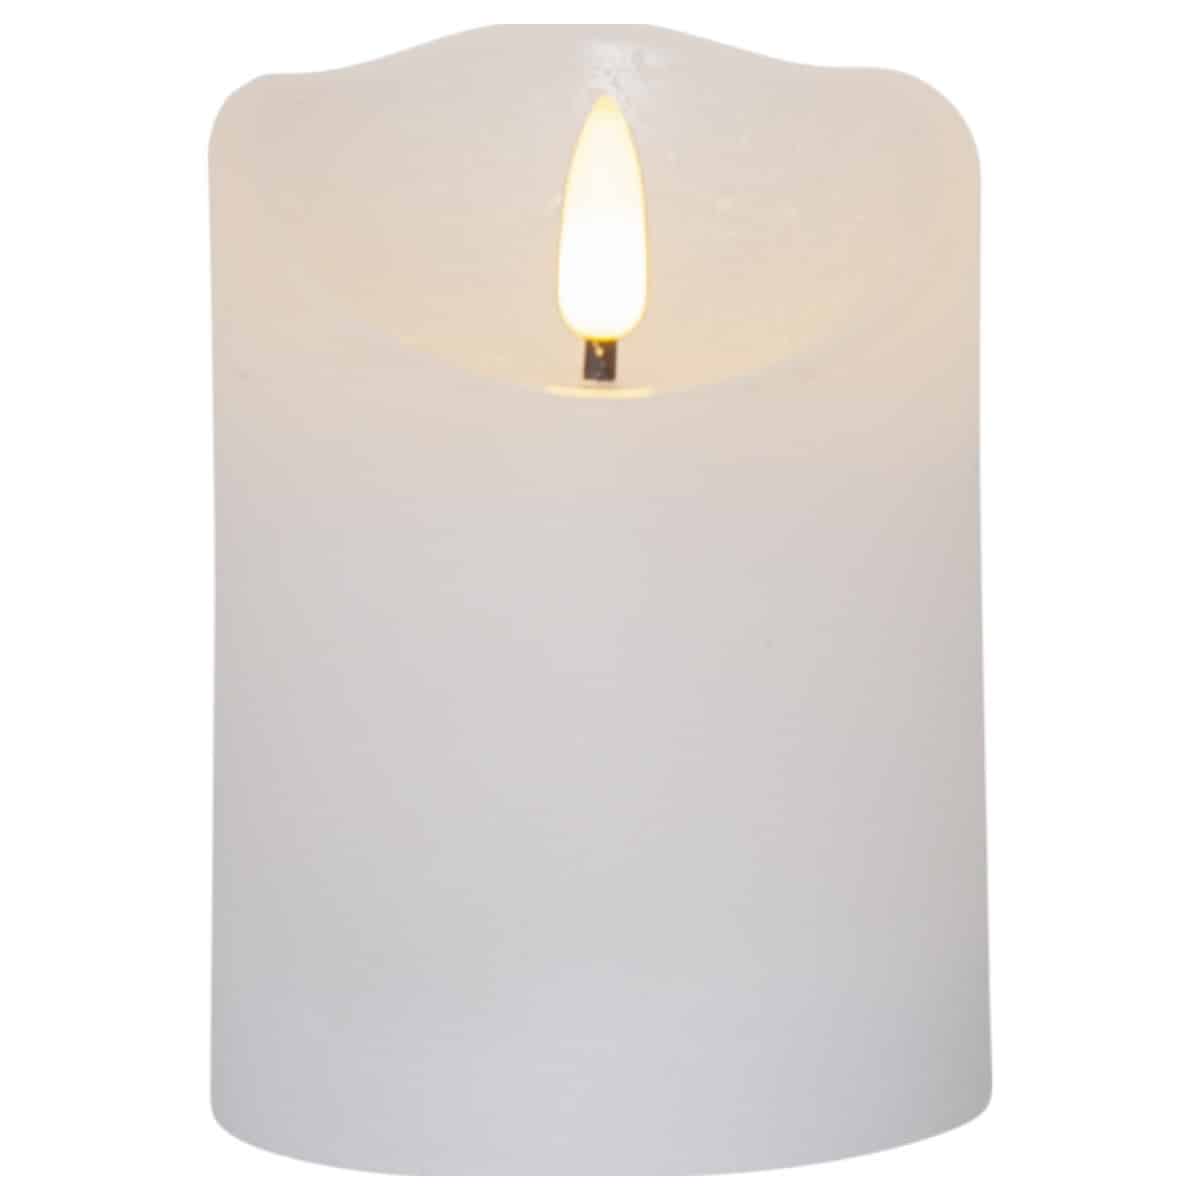 Omslagsbild för “Blockljus Flamme Rustic LED vit 10cm”